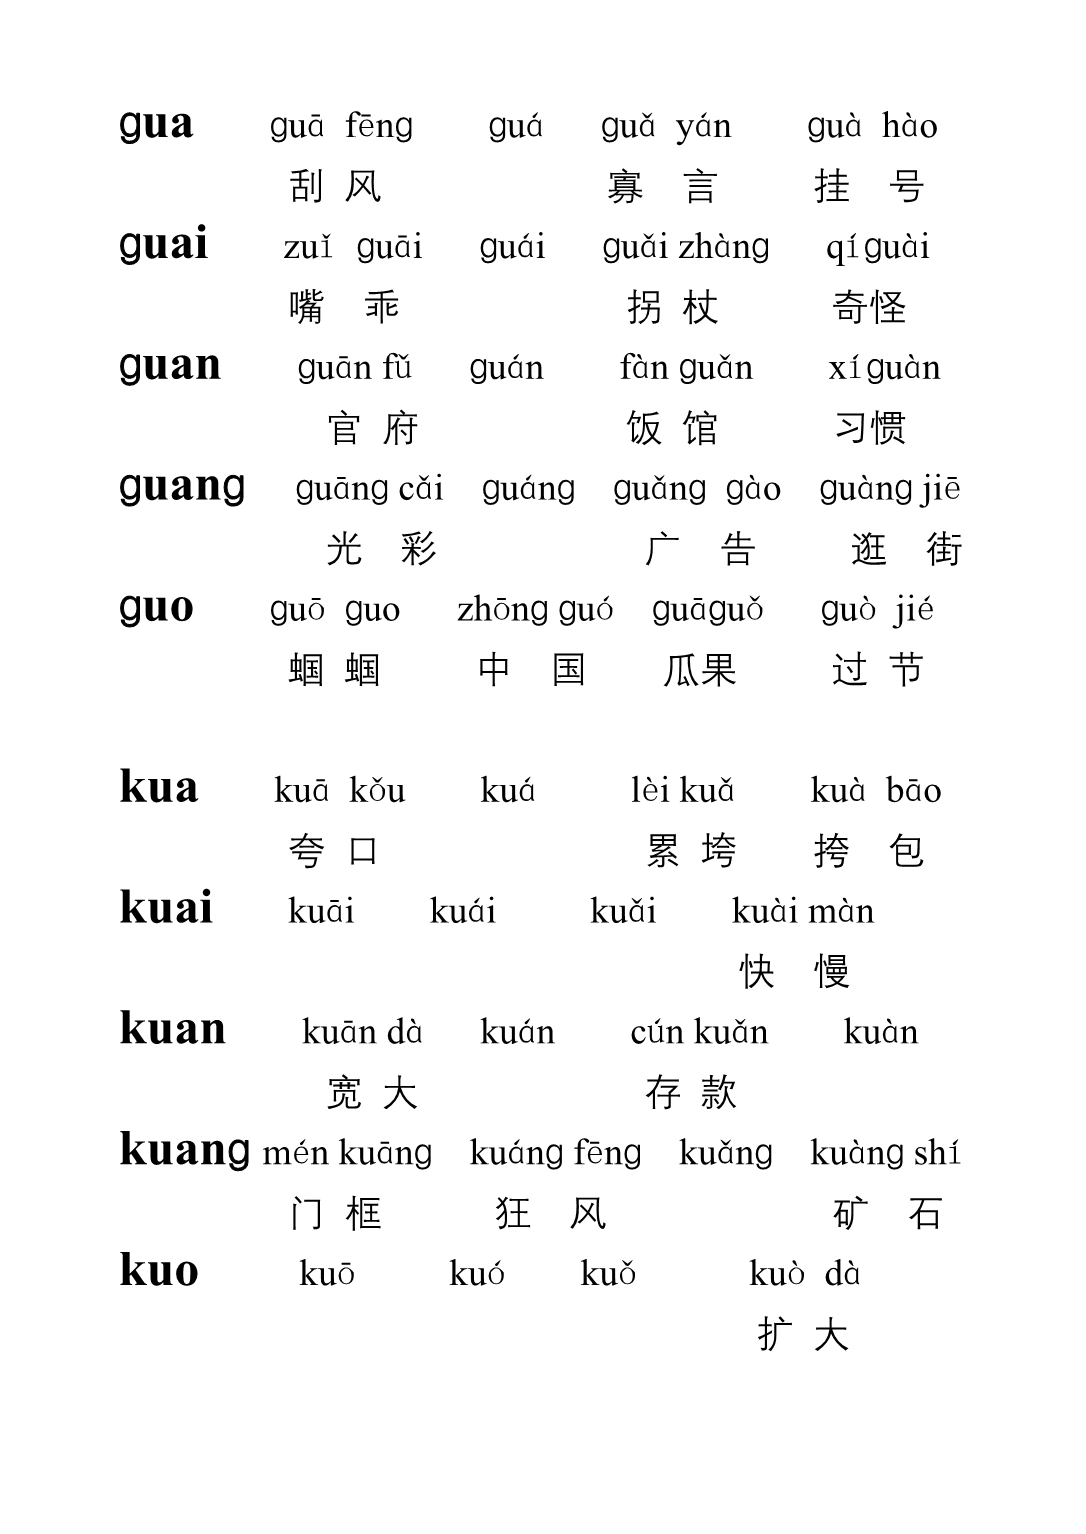 gkh三拼音节的拼音词语